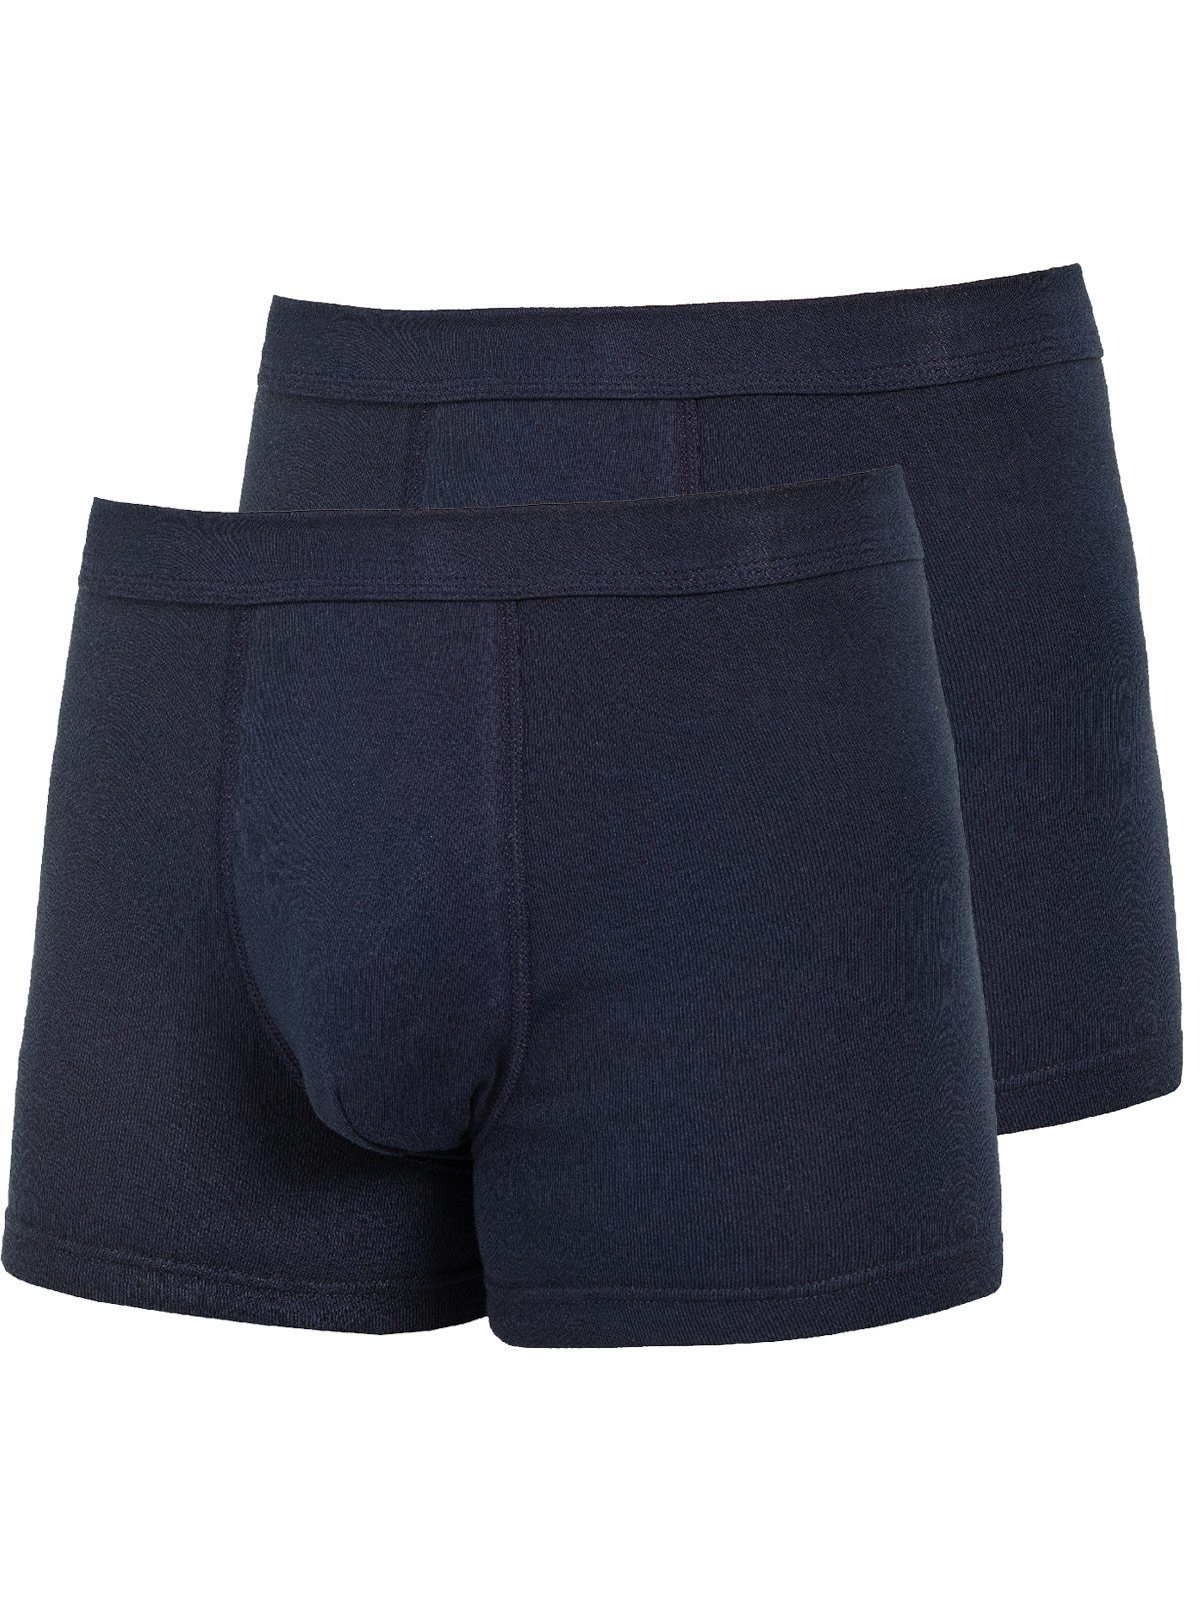 2-St) Pants Pants dunkelblau Retro hohe Bio Cotton KUMPF Herren Markenqualität (Packung, Pack 2er